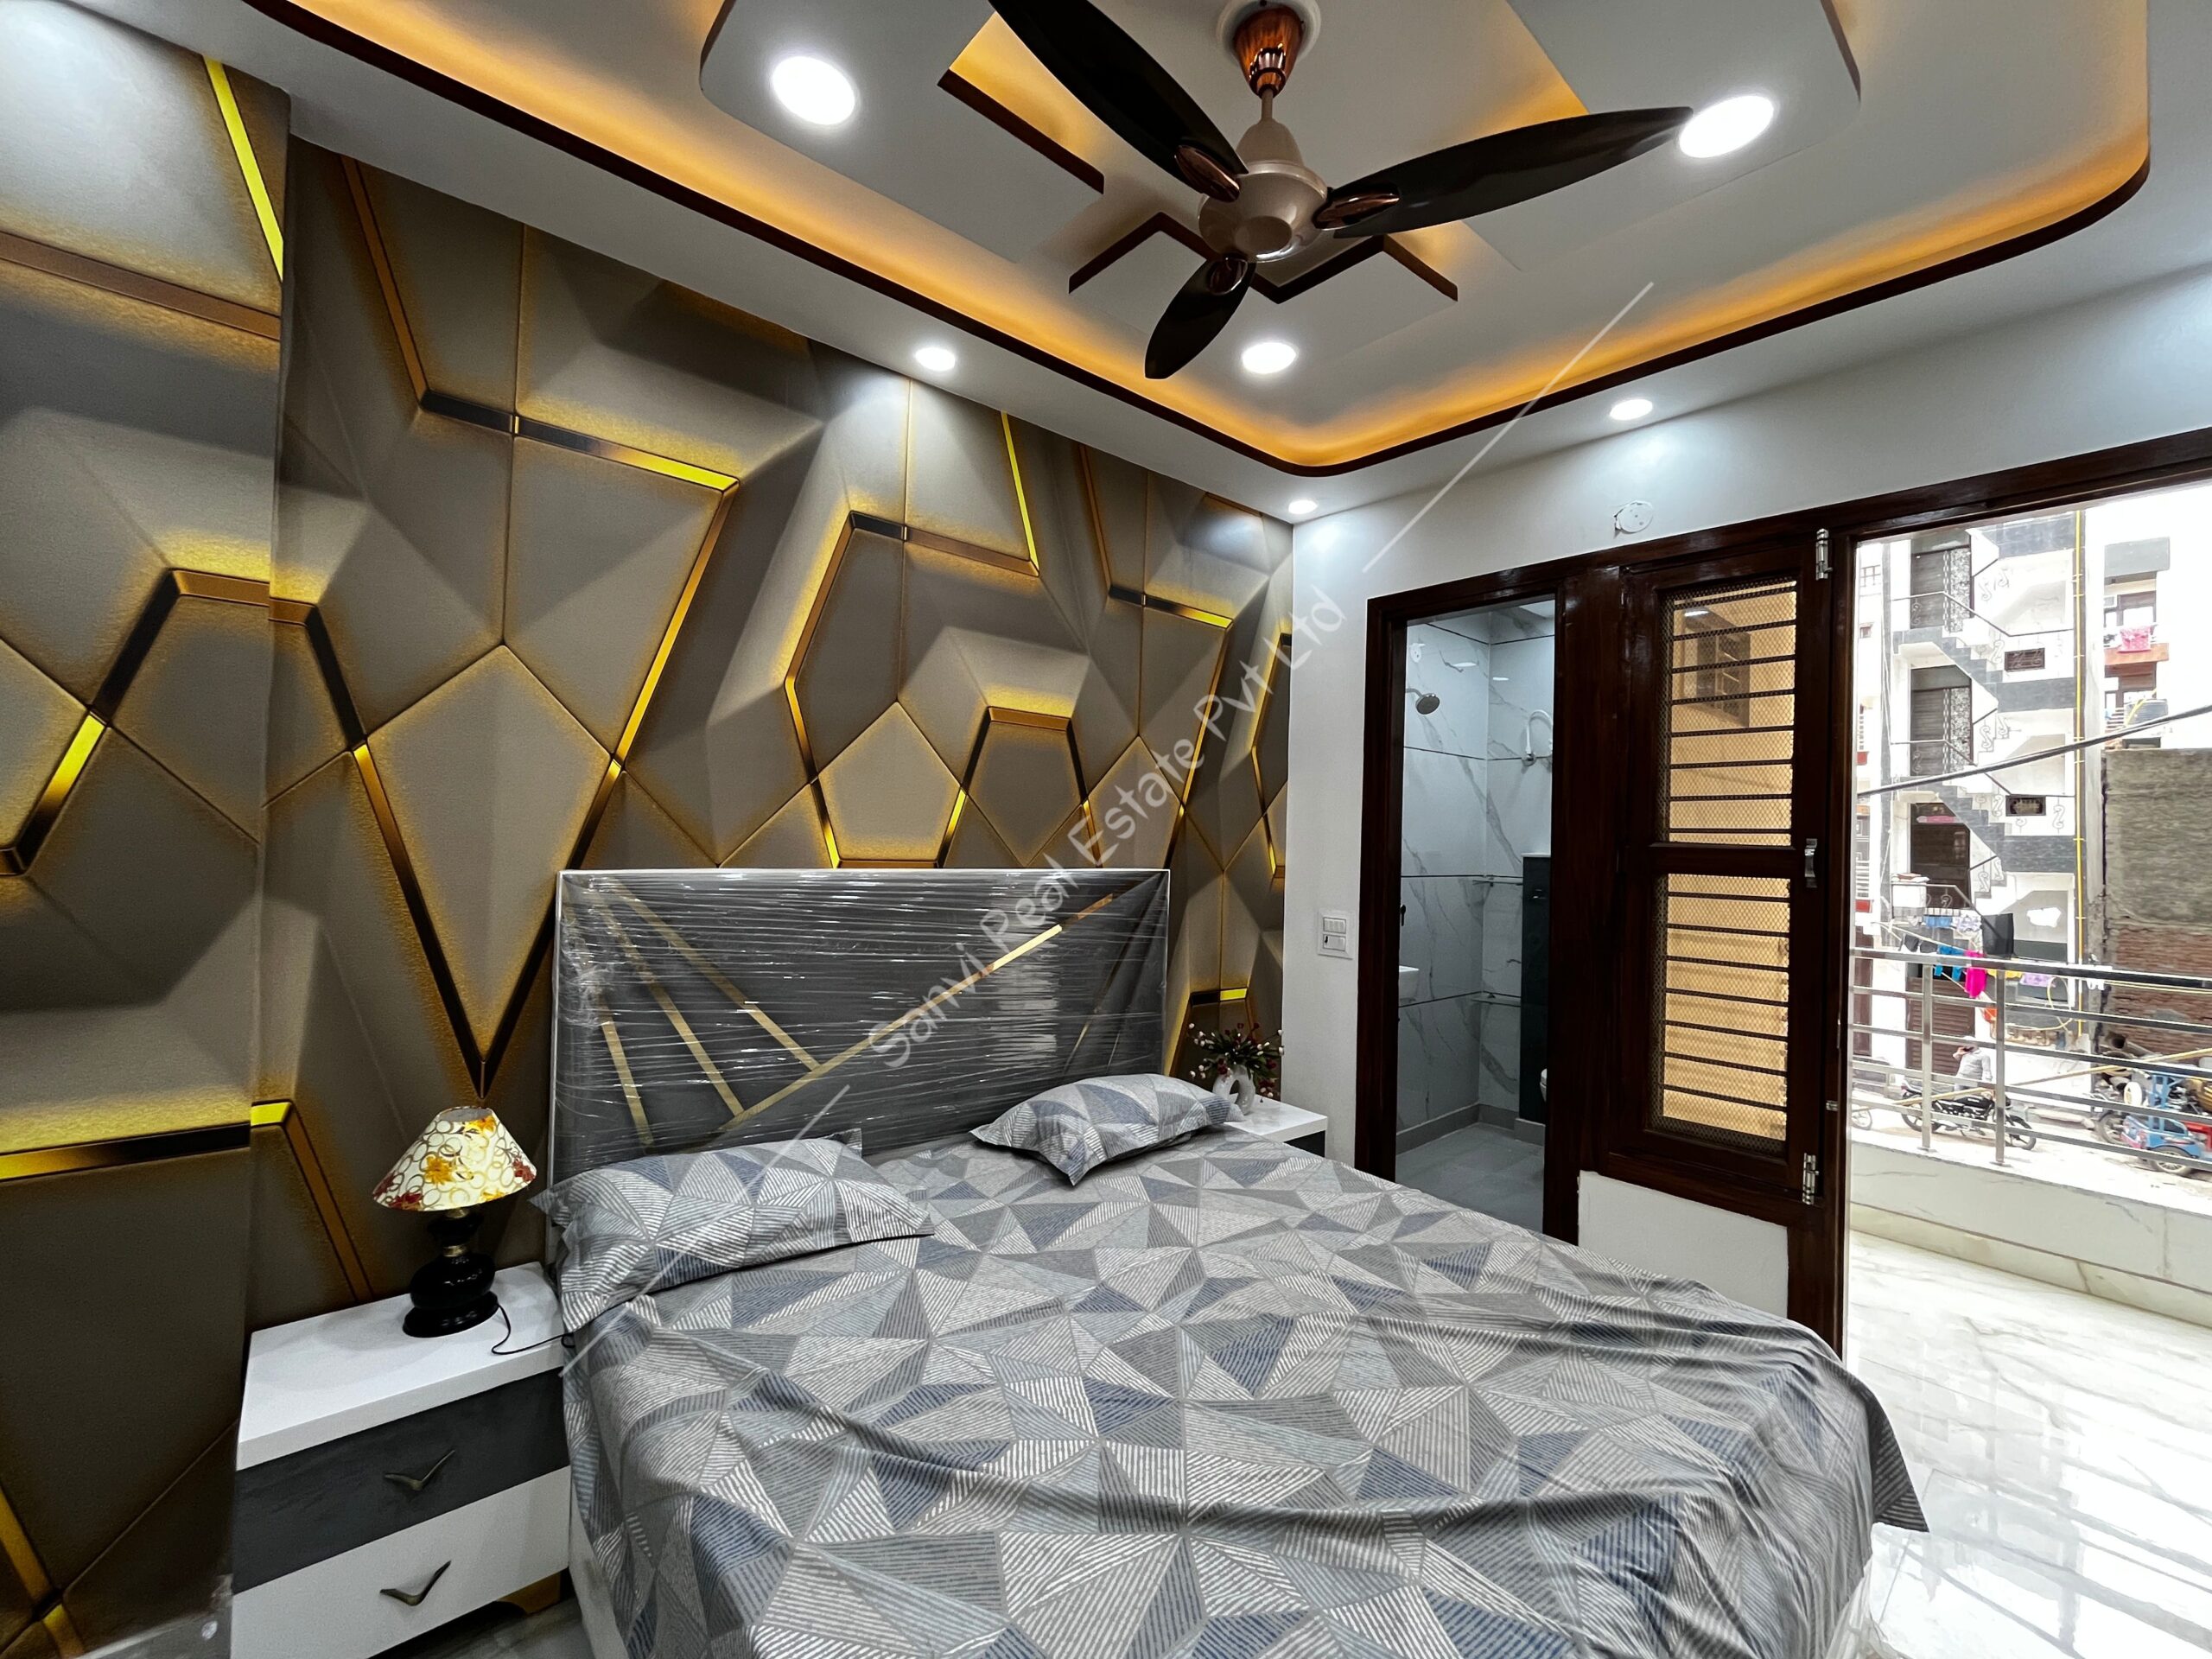 2 BHK Luxurious Property in Uttam Nagar, Delhi | Sanvi Real Estate